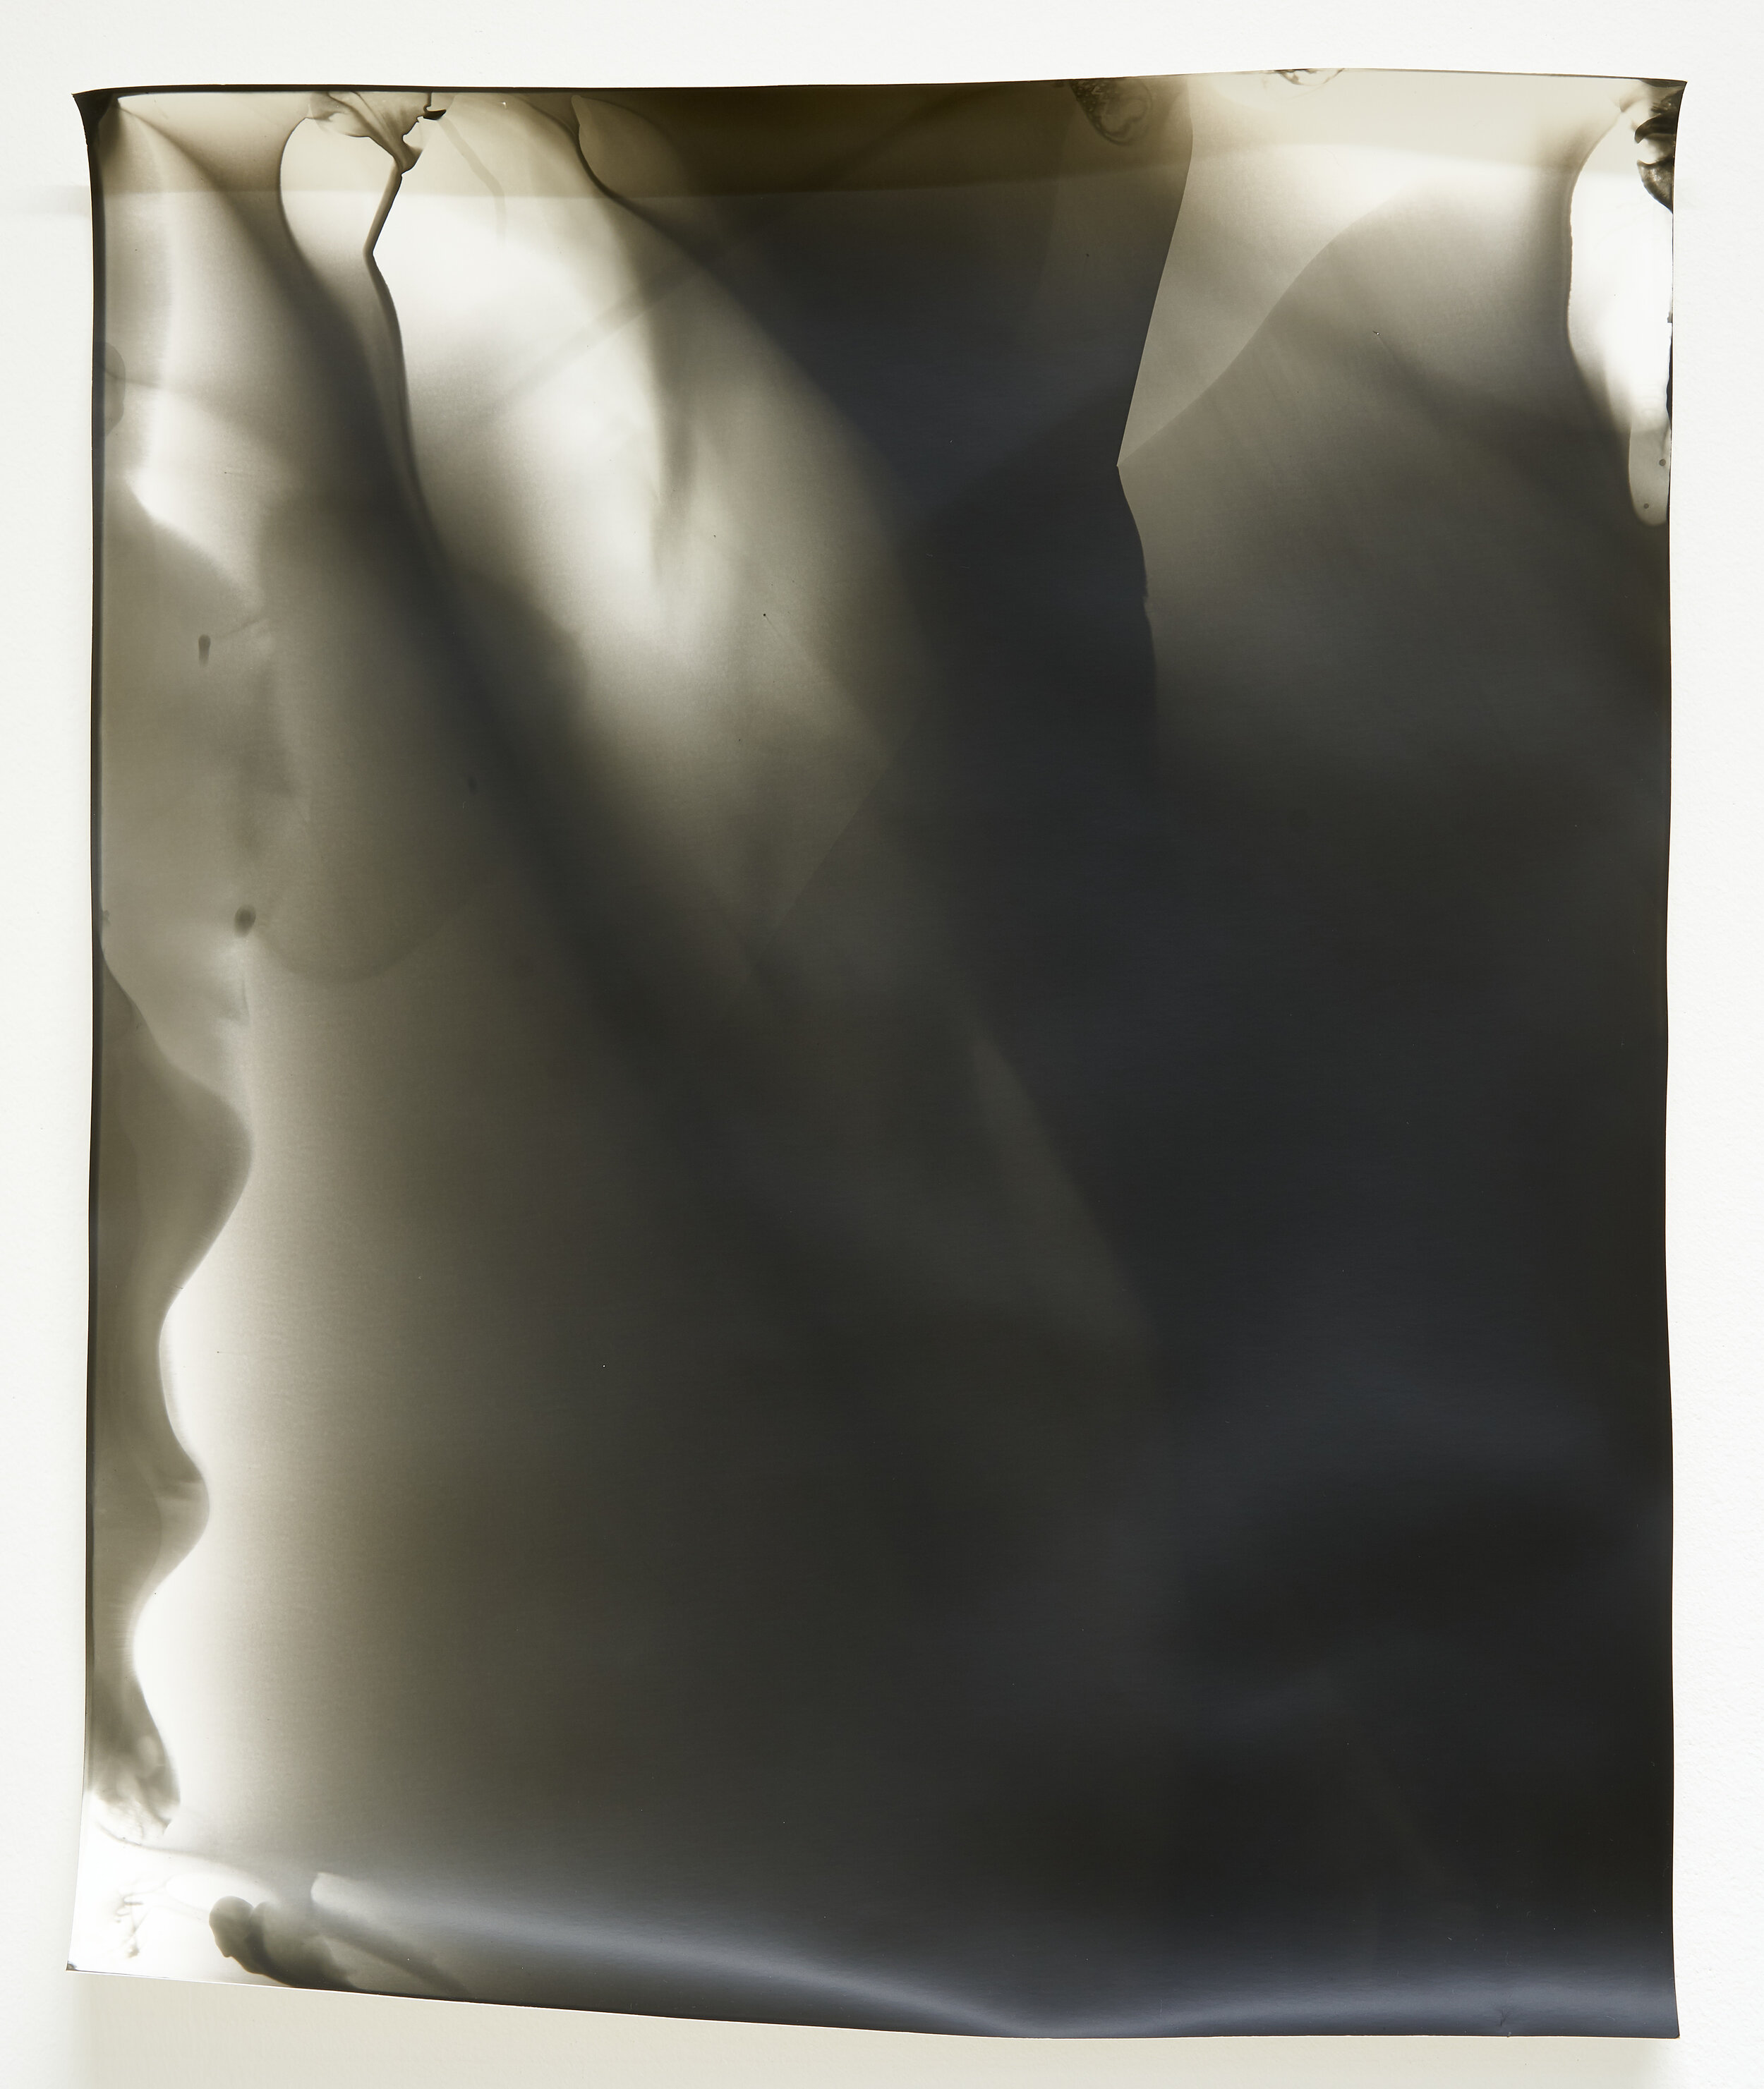  Fog #9  2019  Unique fibre based silver gelatin print  50 x 40 cm  1/1 